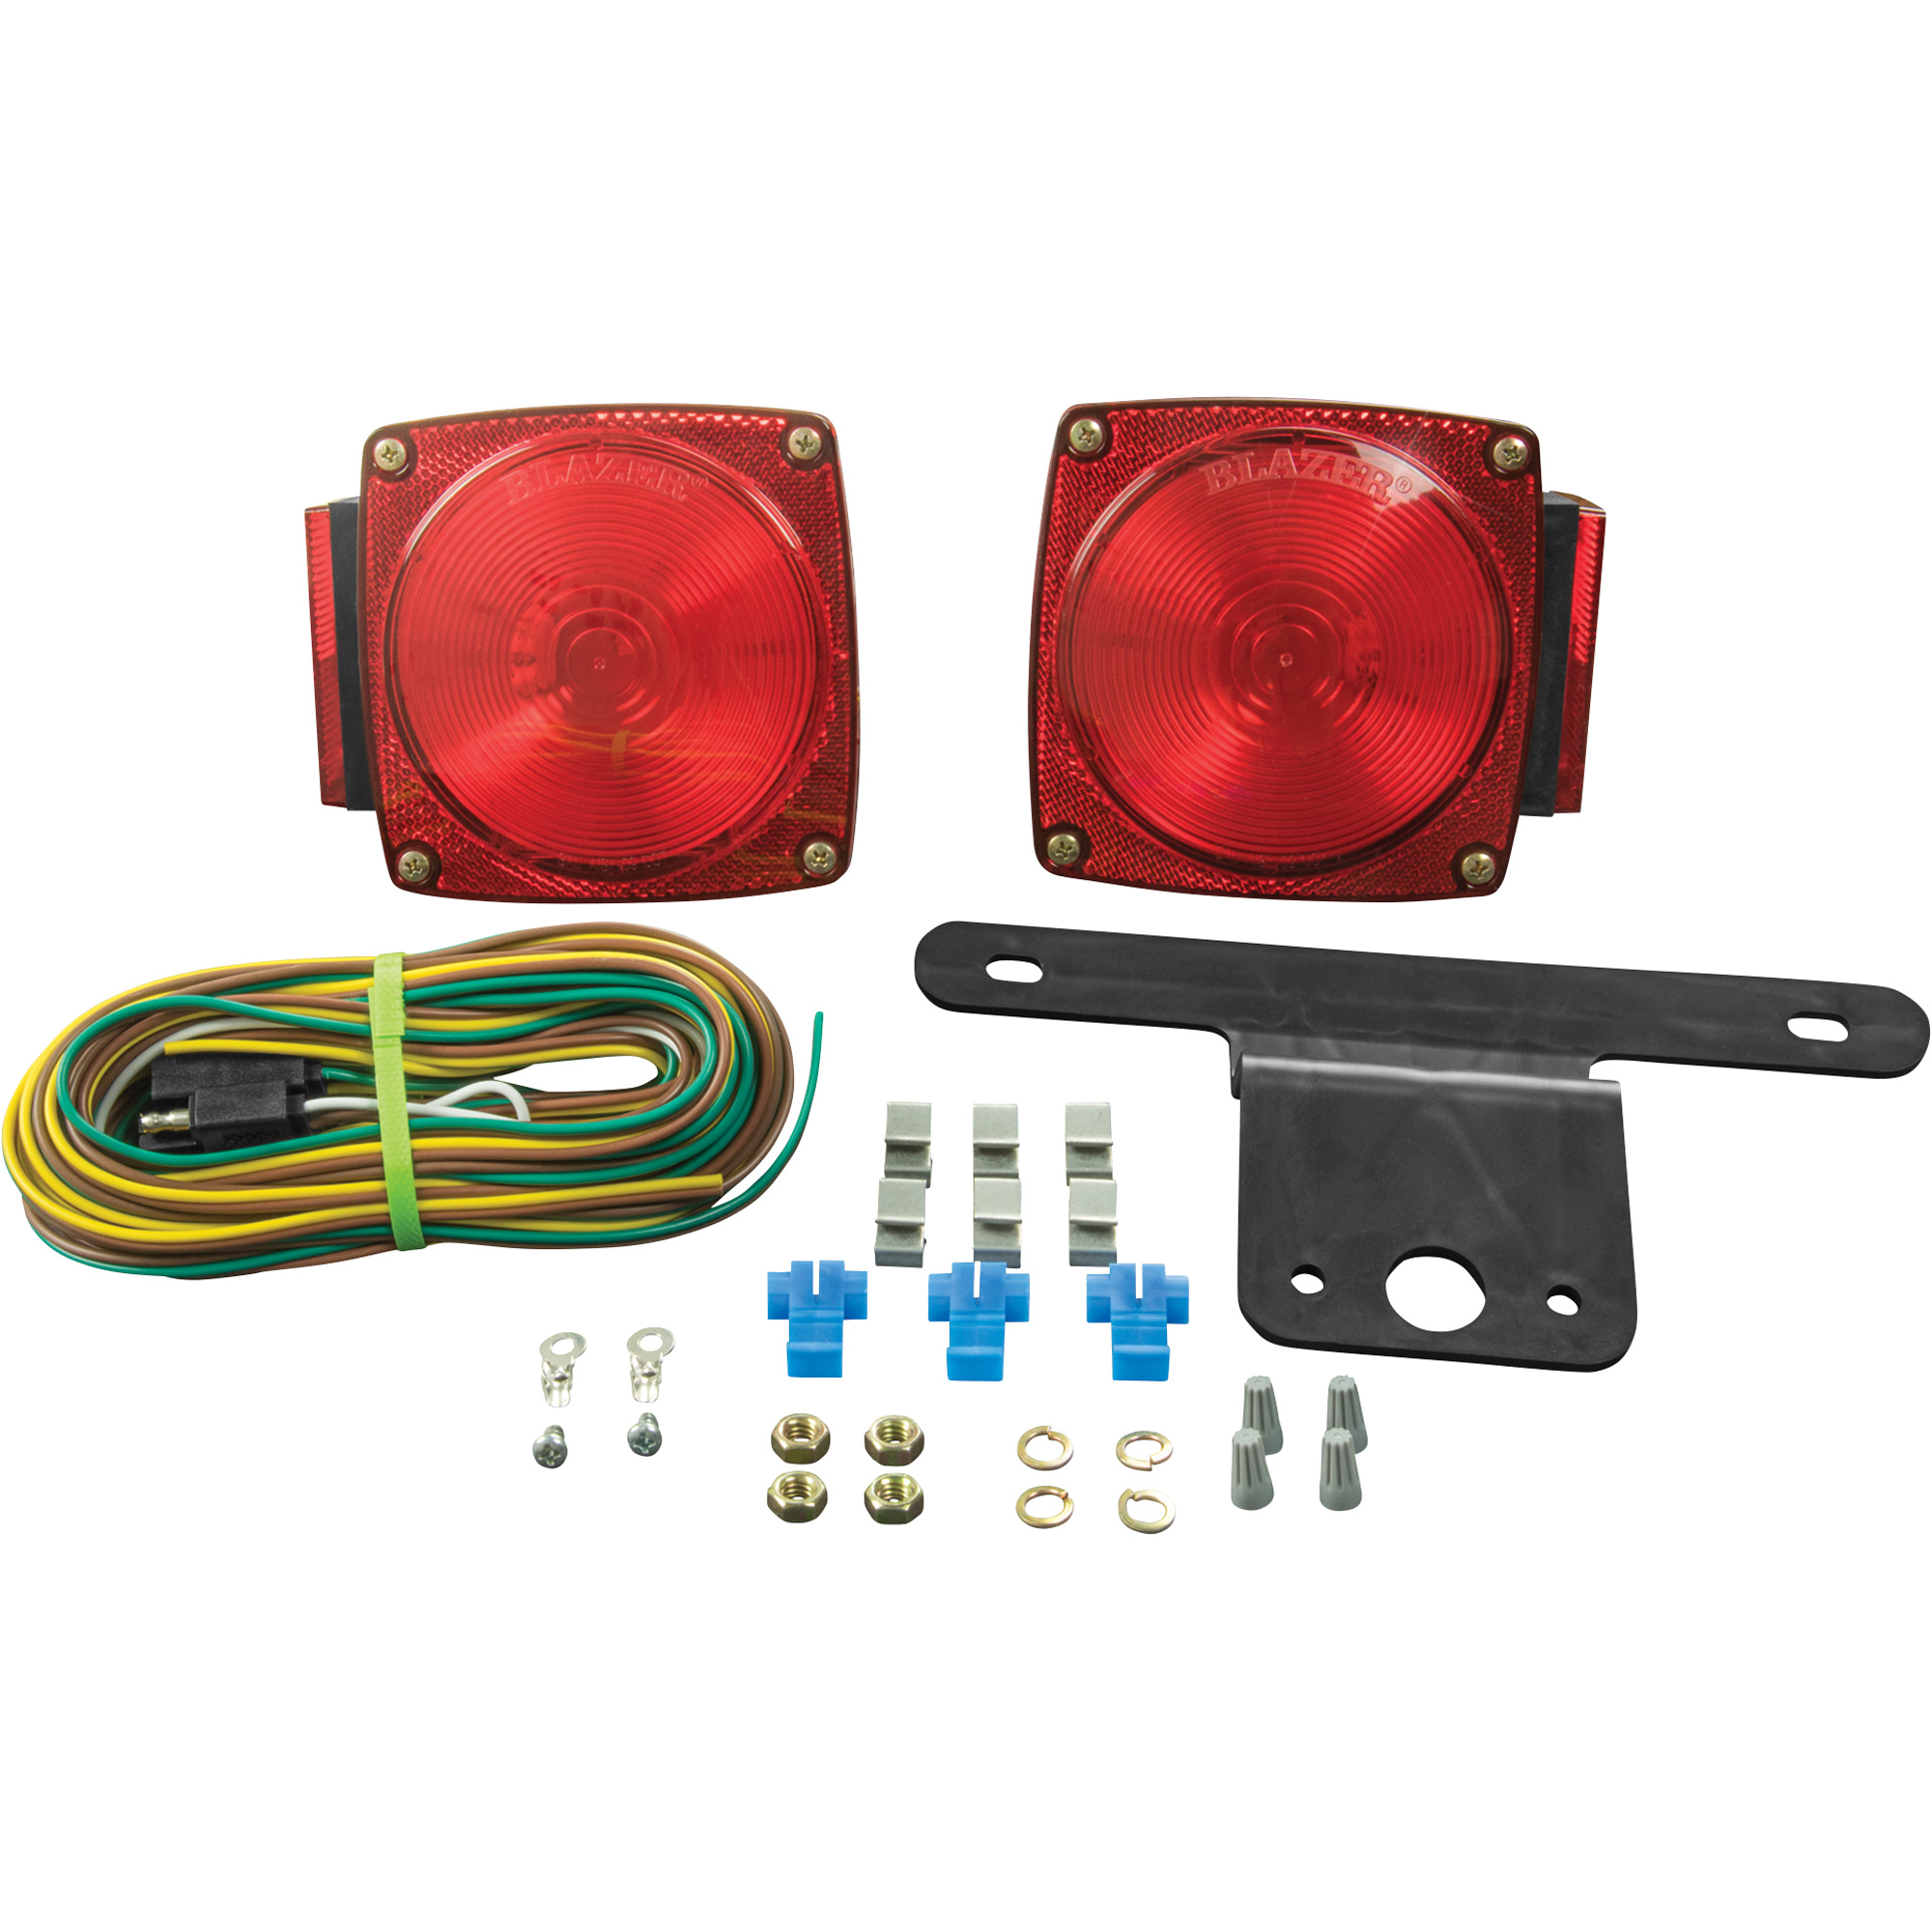 Hopkins Towing Solutions LED Trailer Lighting Kit â For Vehicles Under 80Inch Wide, Red, Model C6423PTM